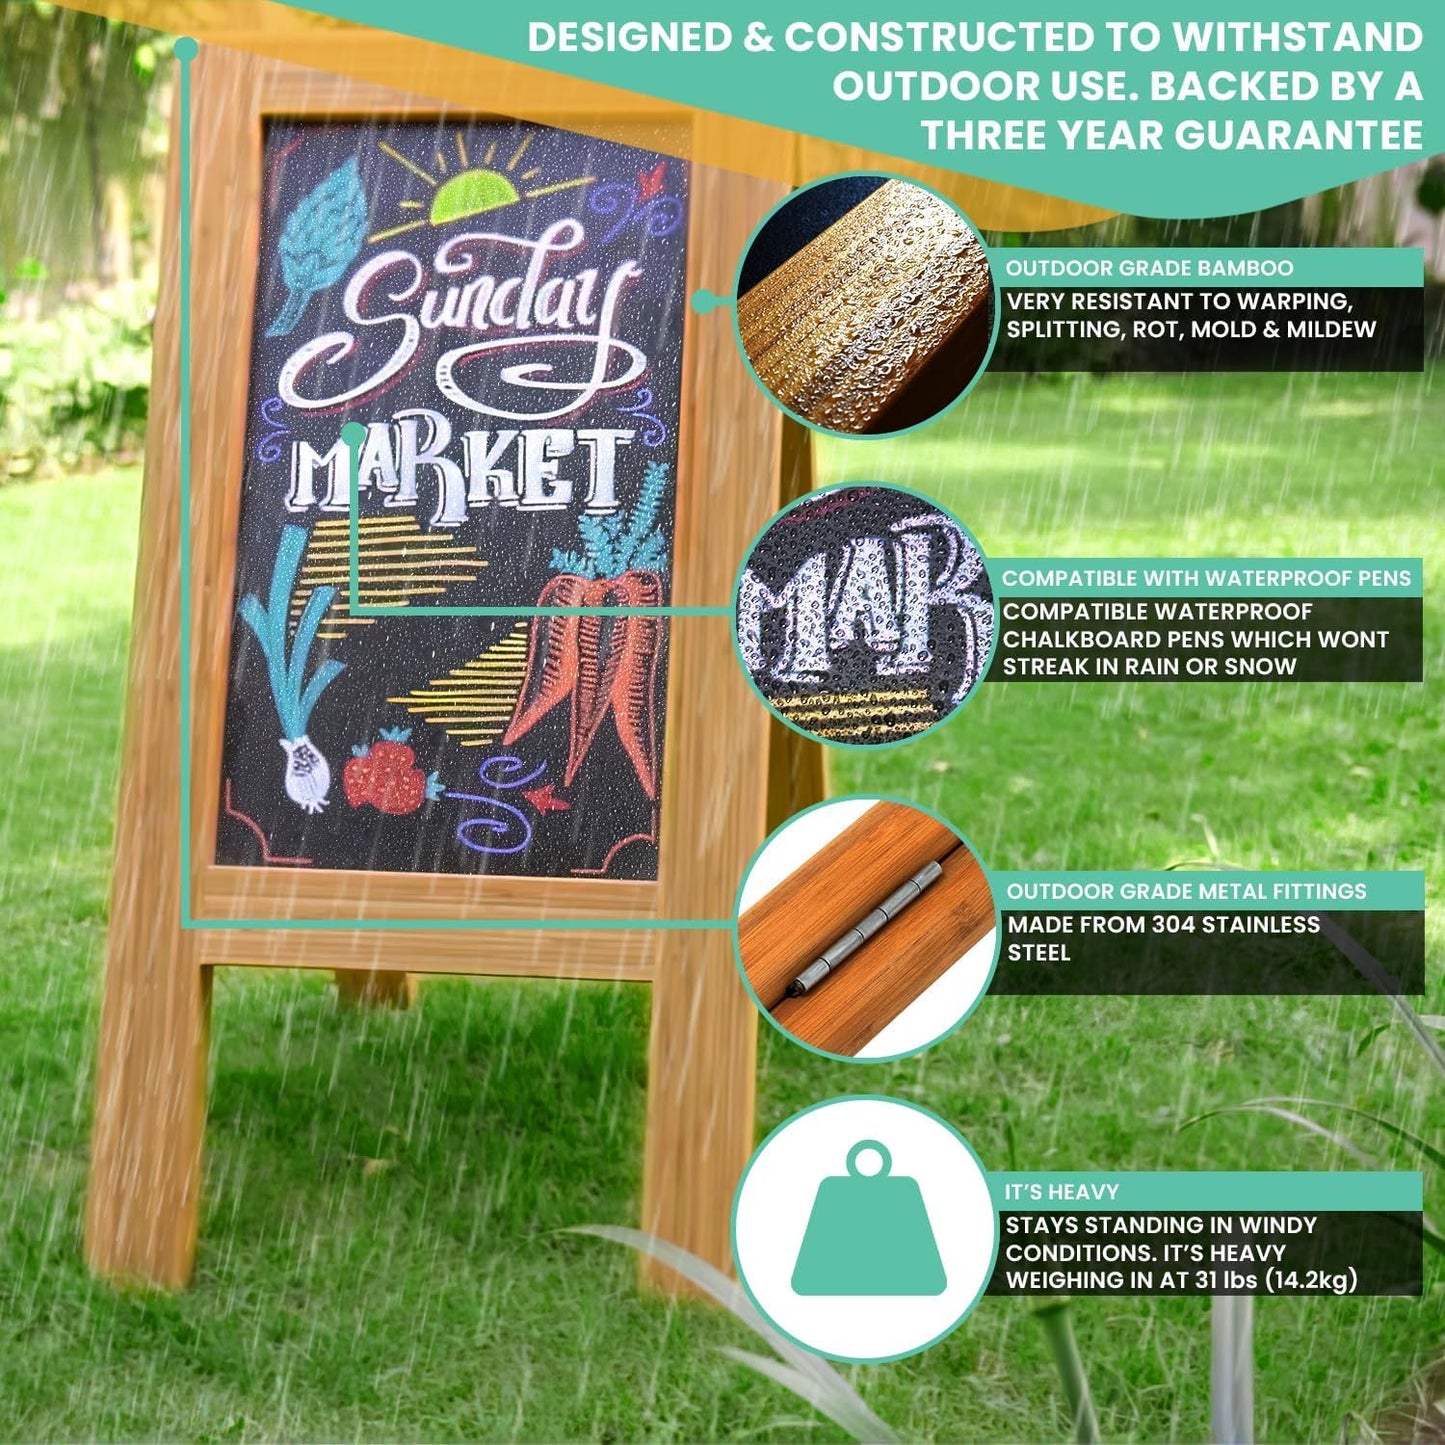 Weatherproof Outdoor Use A-Frame Chalkboard, Large Magnetic Sandwich Board Sign for Business, Sidewalk Blackboard for Rest